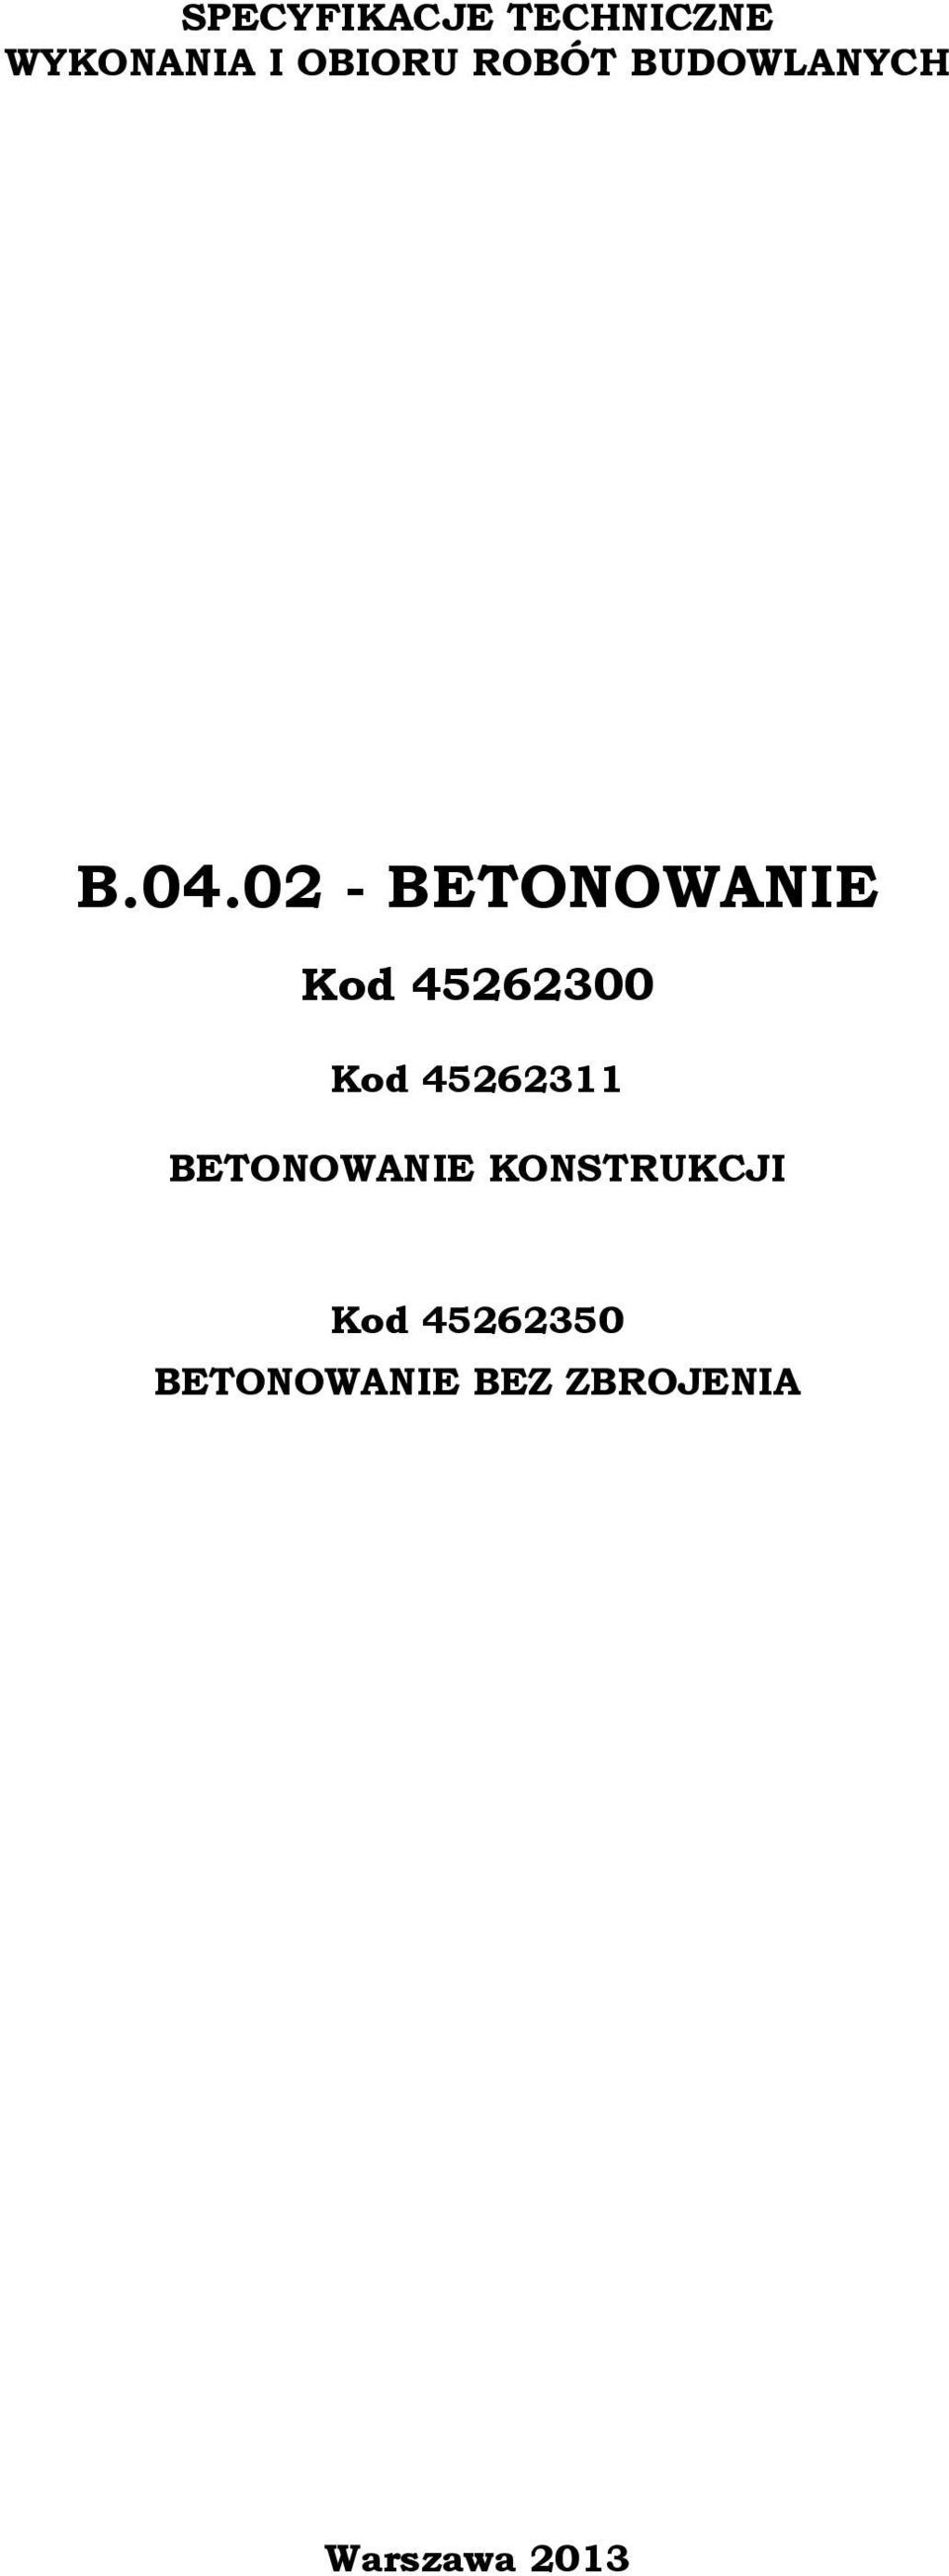 02 - BETONOWANIE Kod 45262300 Kod 45262311